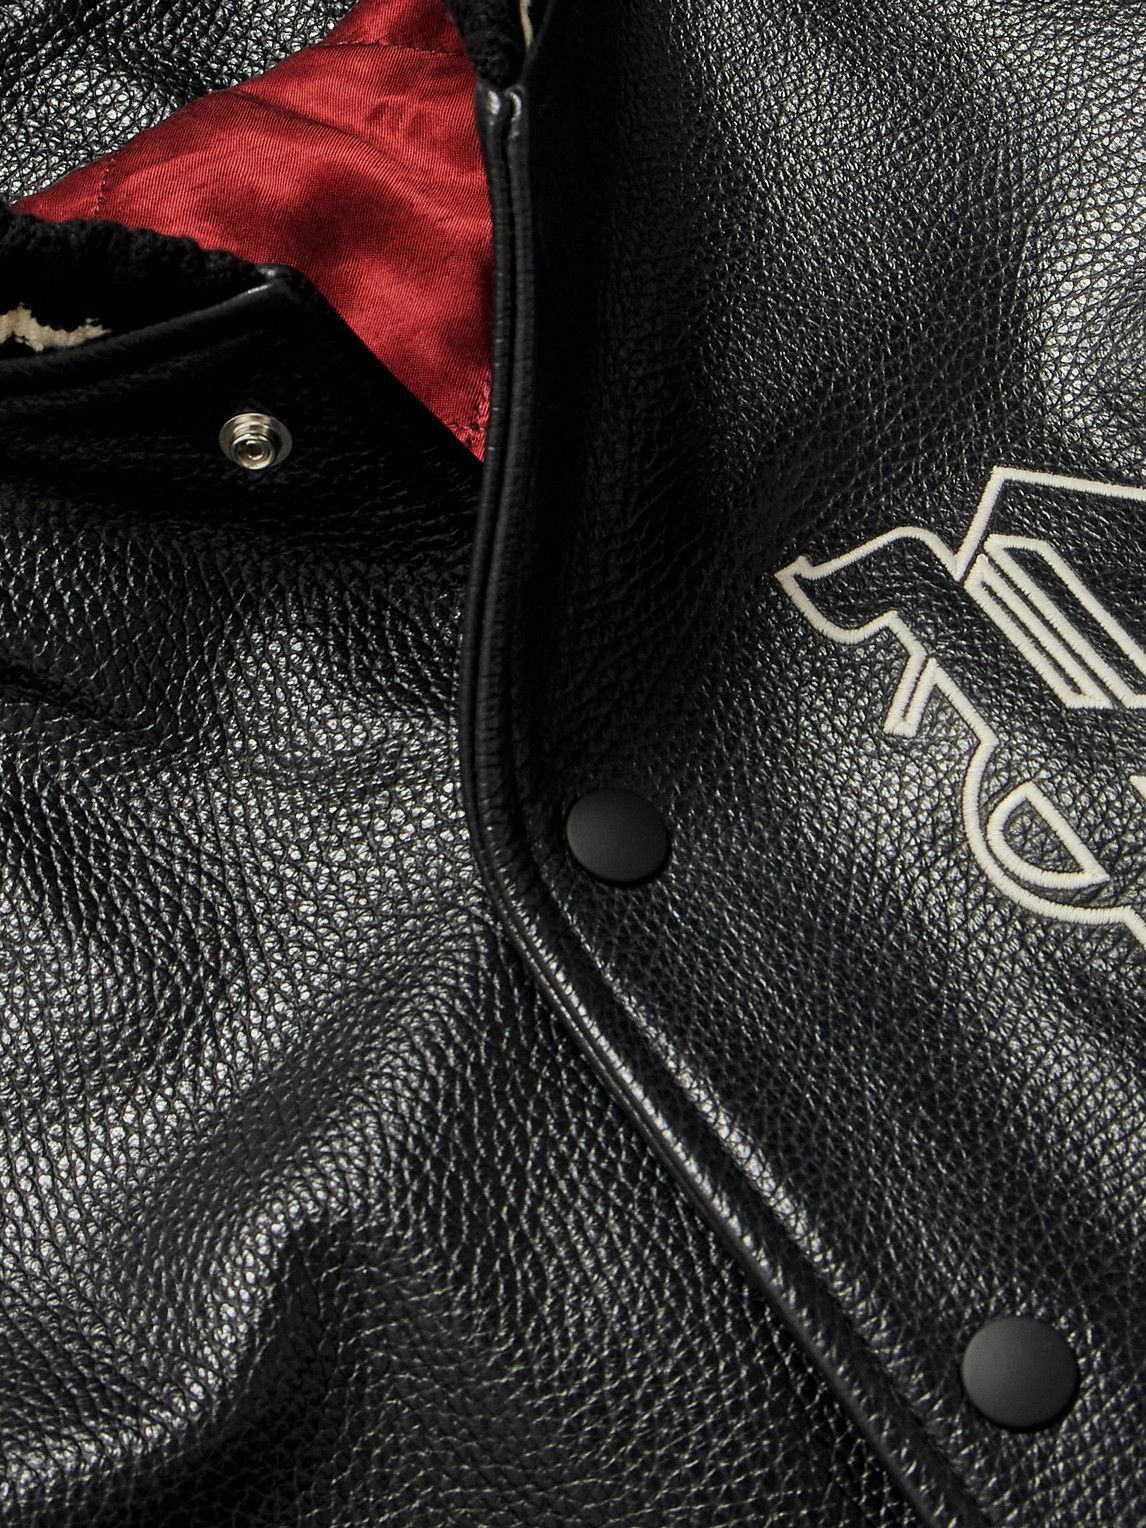 Streetwise Clothing Monogram Coach Jacket (Black) 3XL / Black